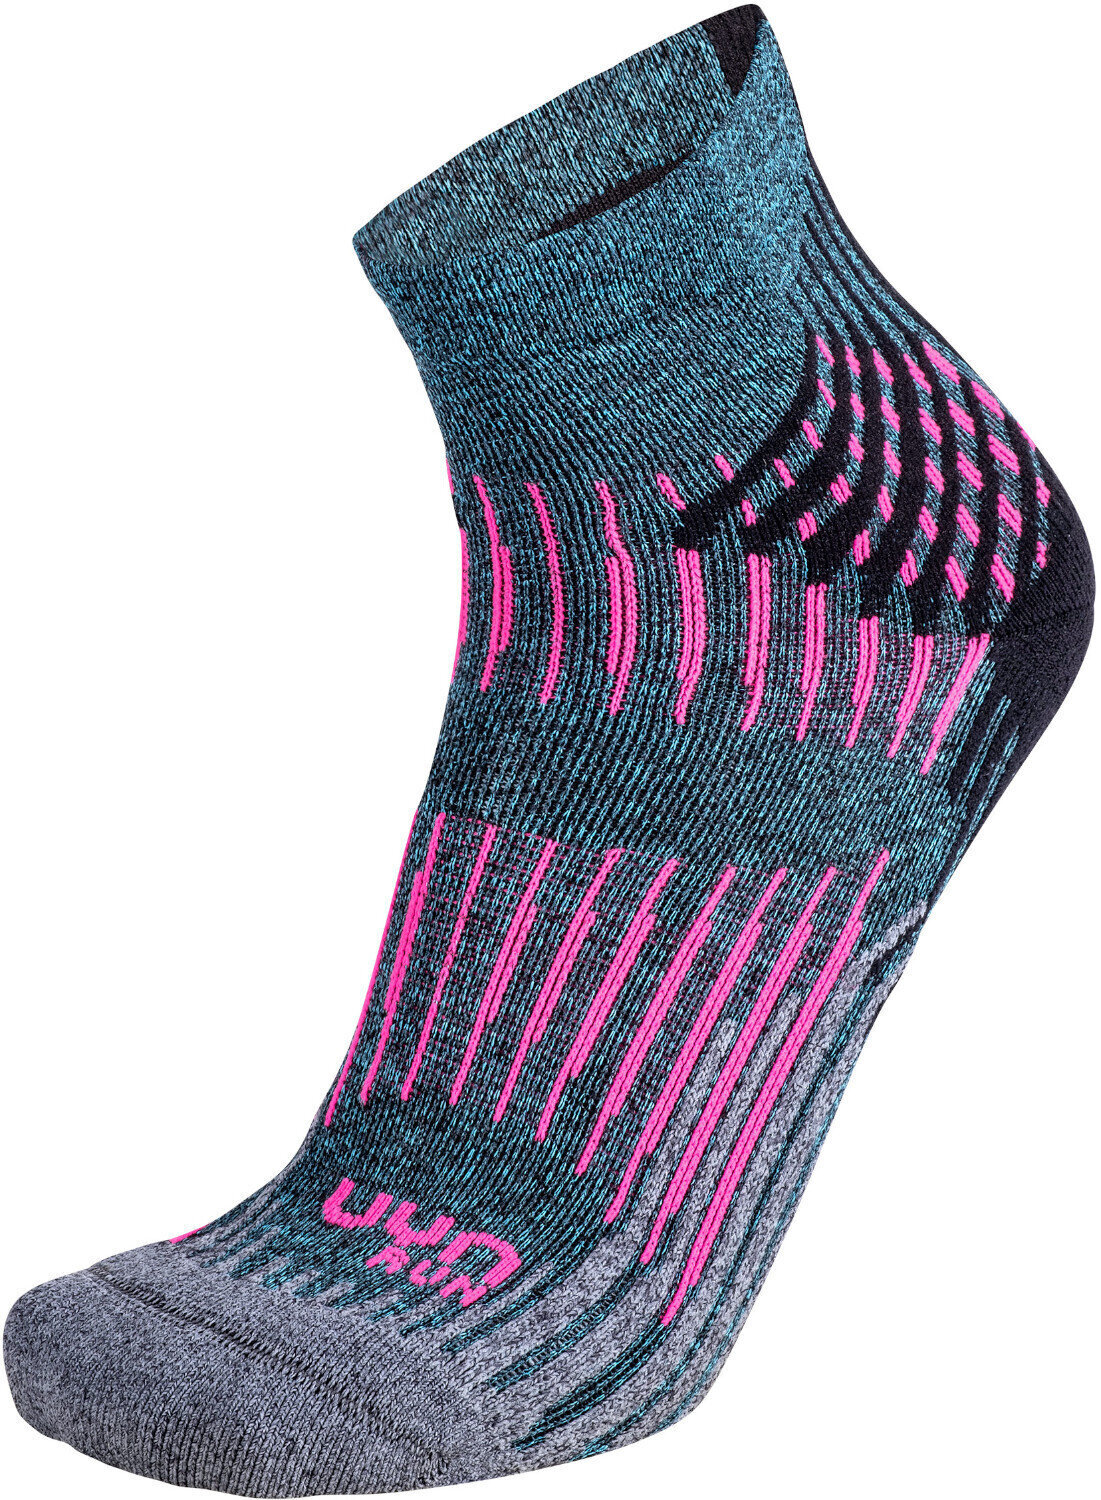 Skarpety do biegania
 UYN Run Shockwave Turquoise Melange-Grey-Pink 37/38 Skarpety do biegania